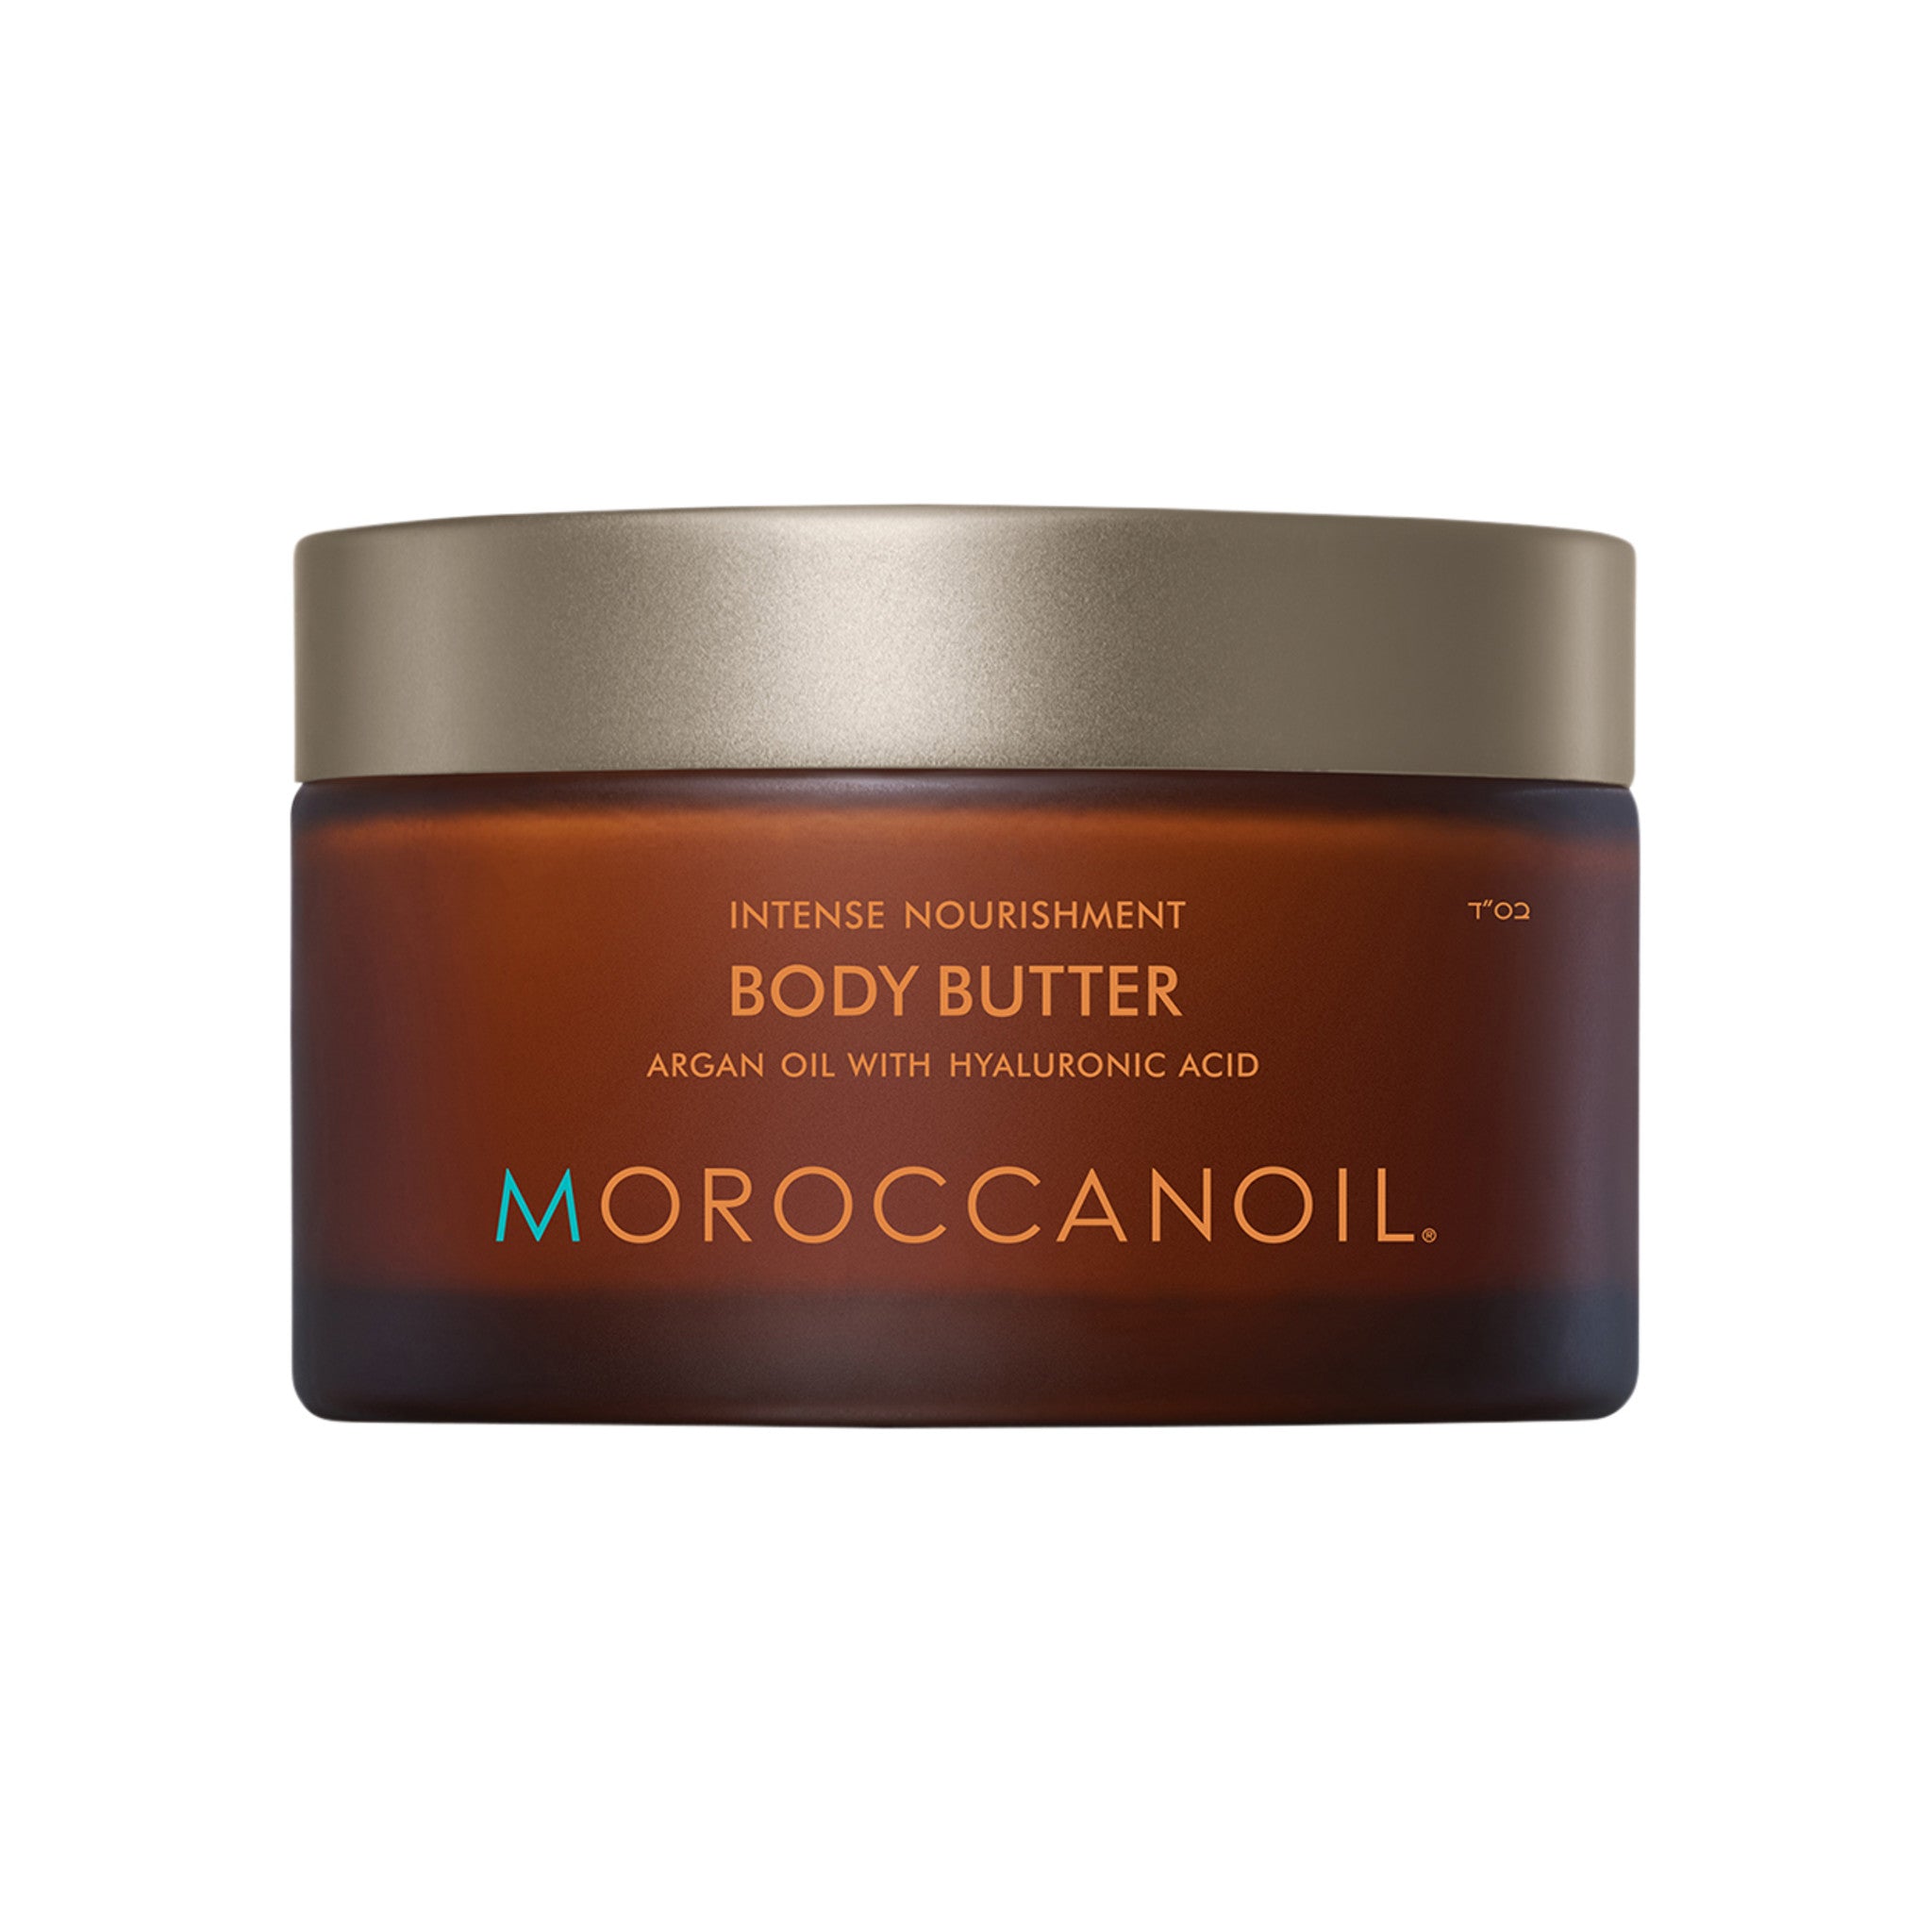 Moroccanoil Body Butter main image.